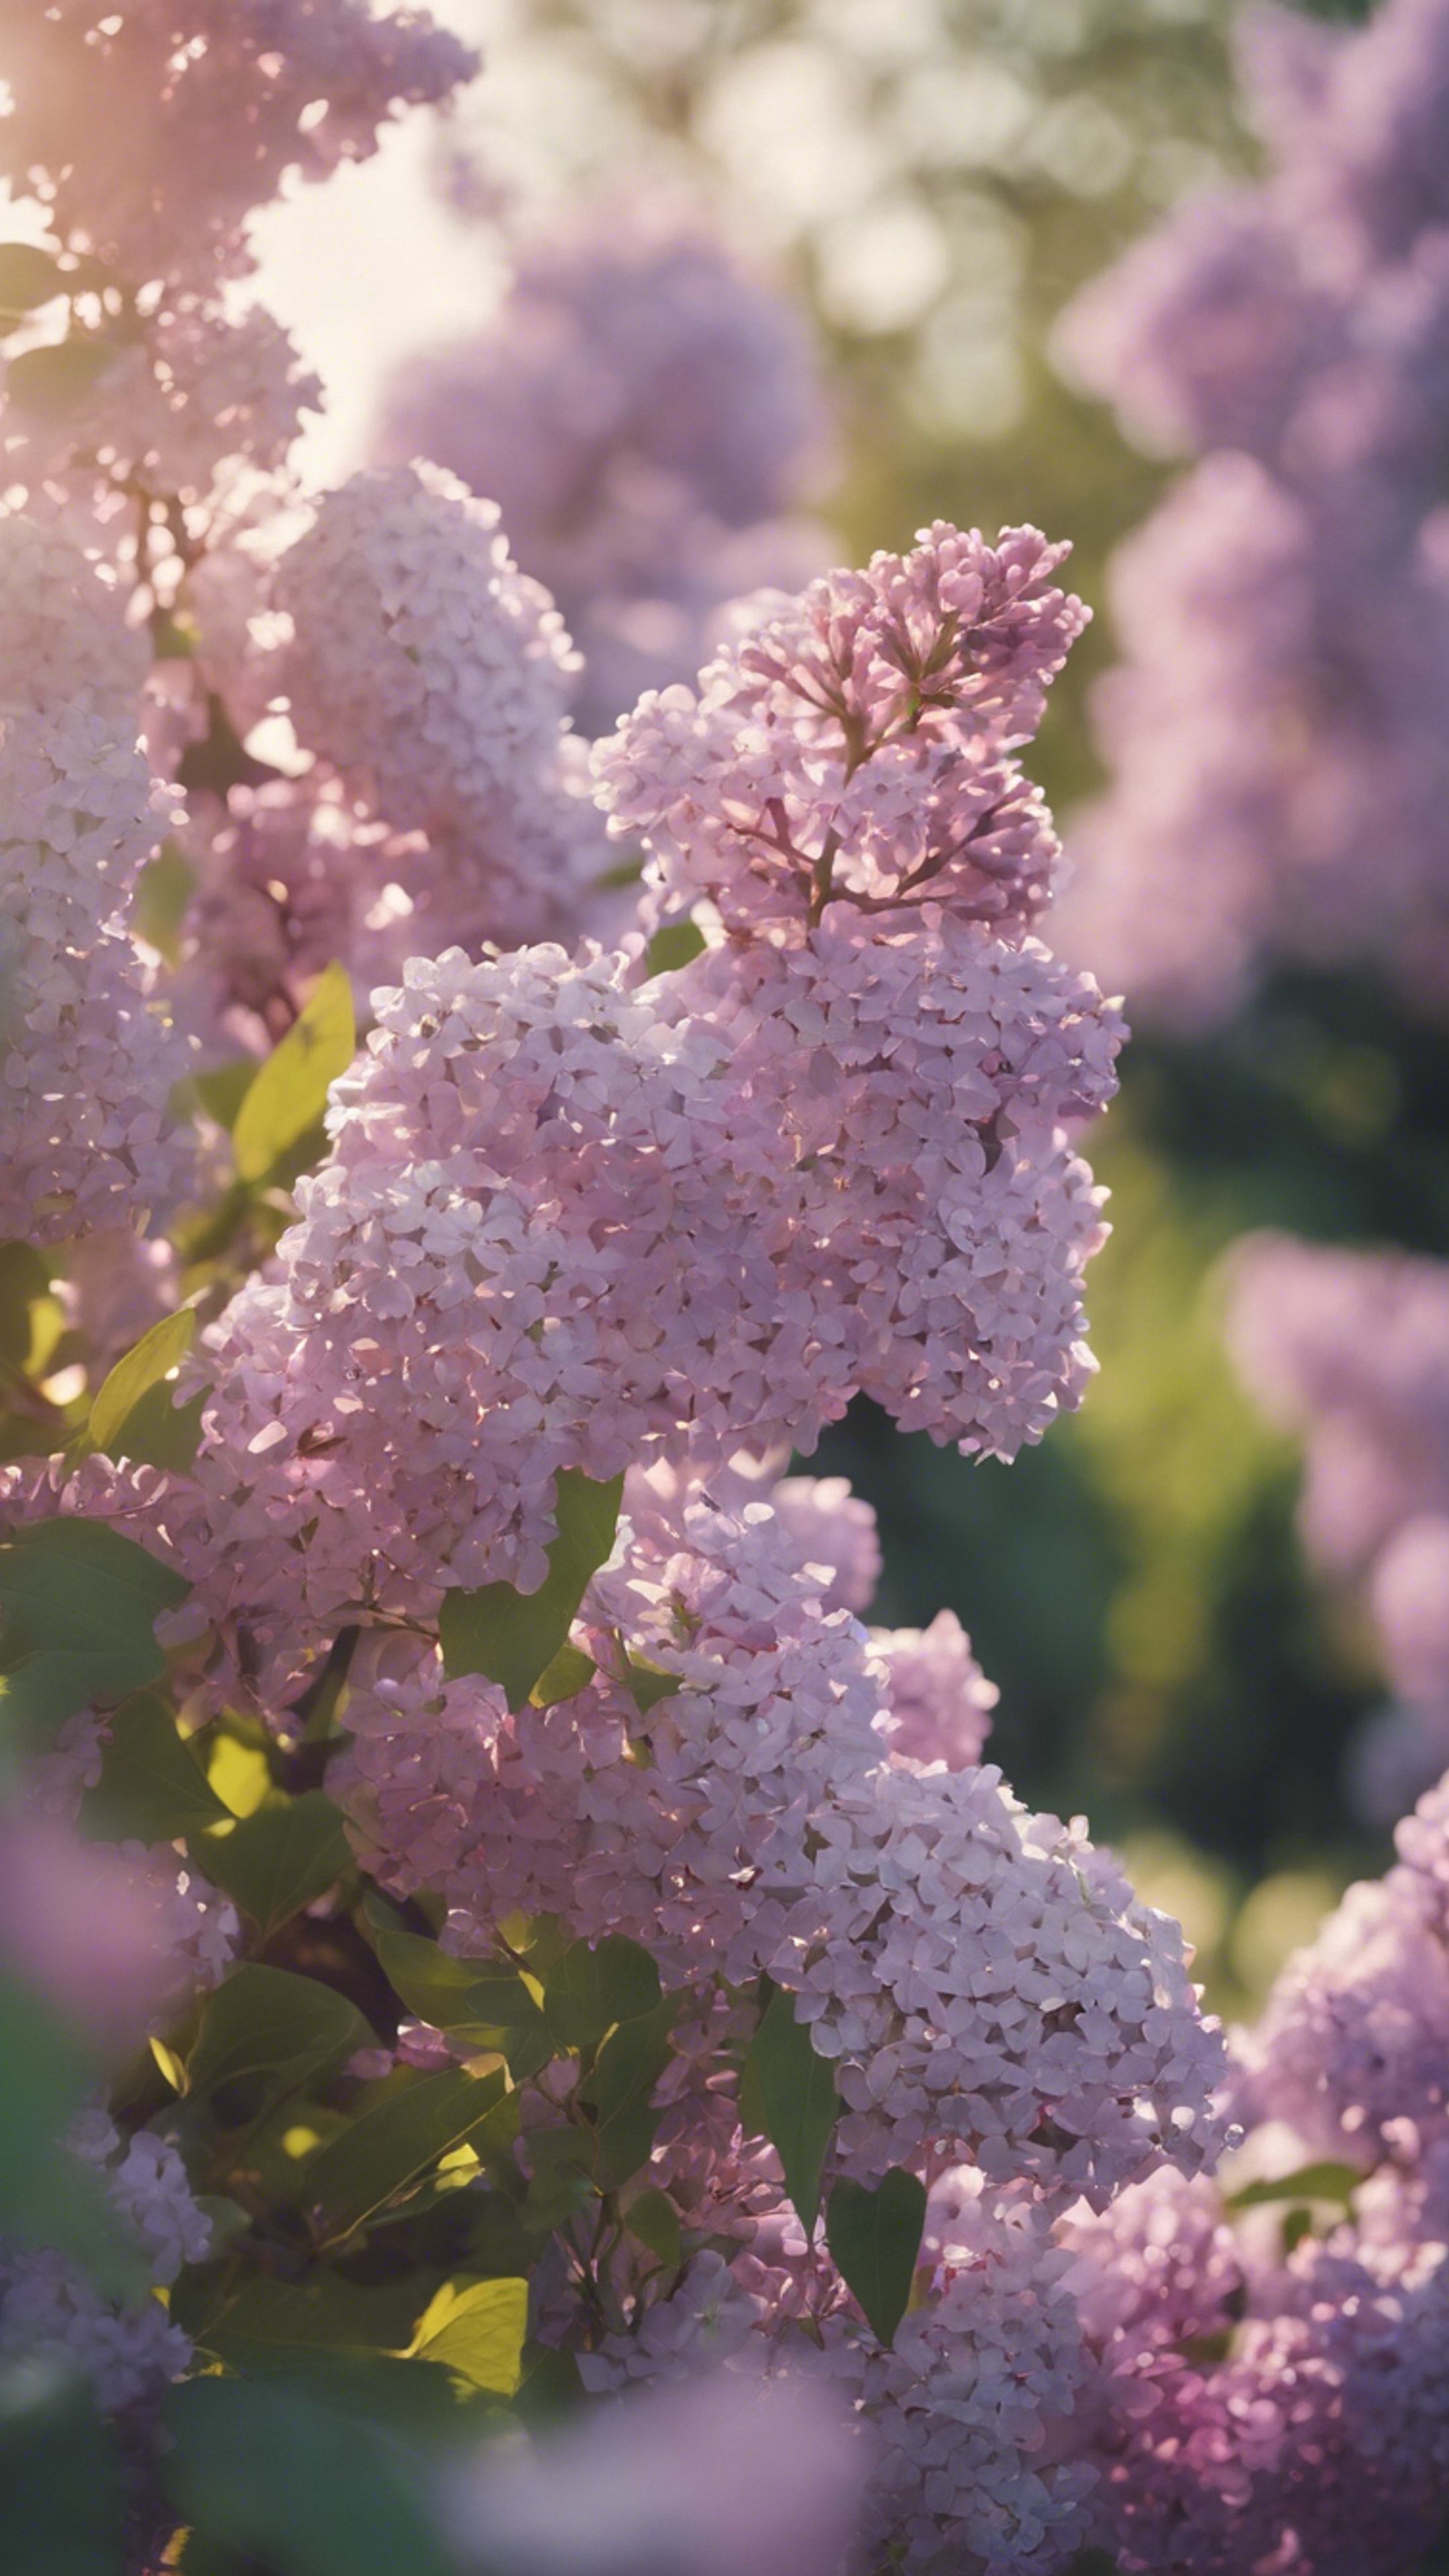 A bountiful garden full of preppy lilac flowers in full bloom under soft sunlight. Fondo de pantalla[535239431e6946dc9128]